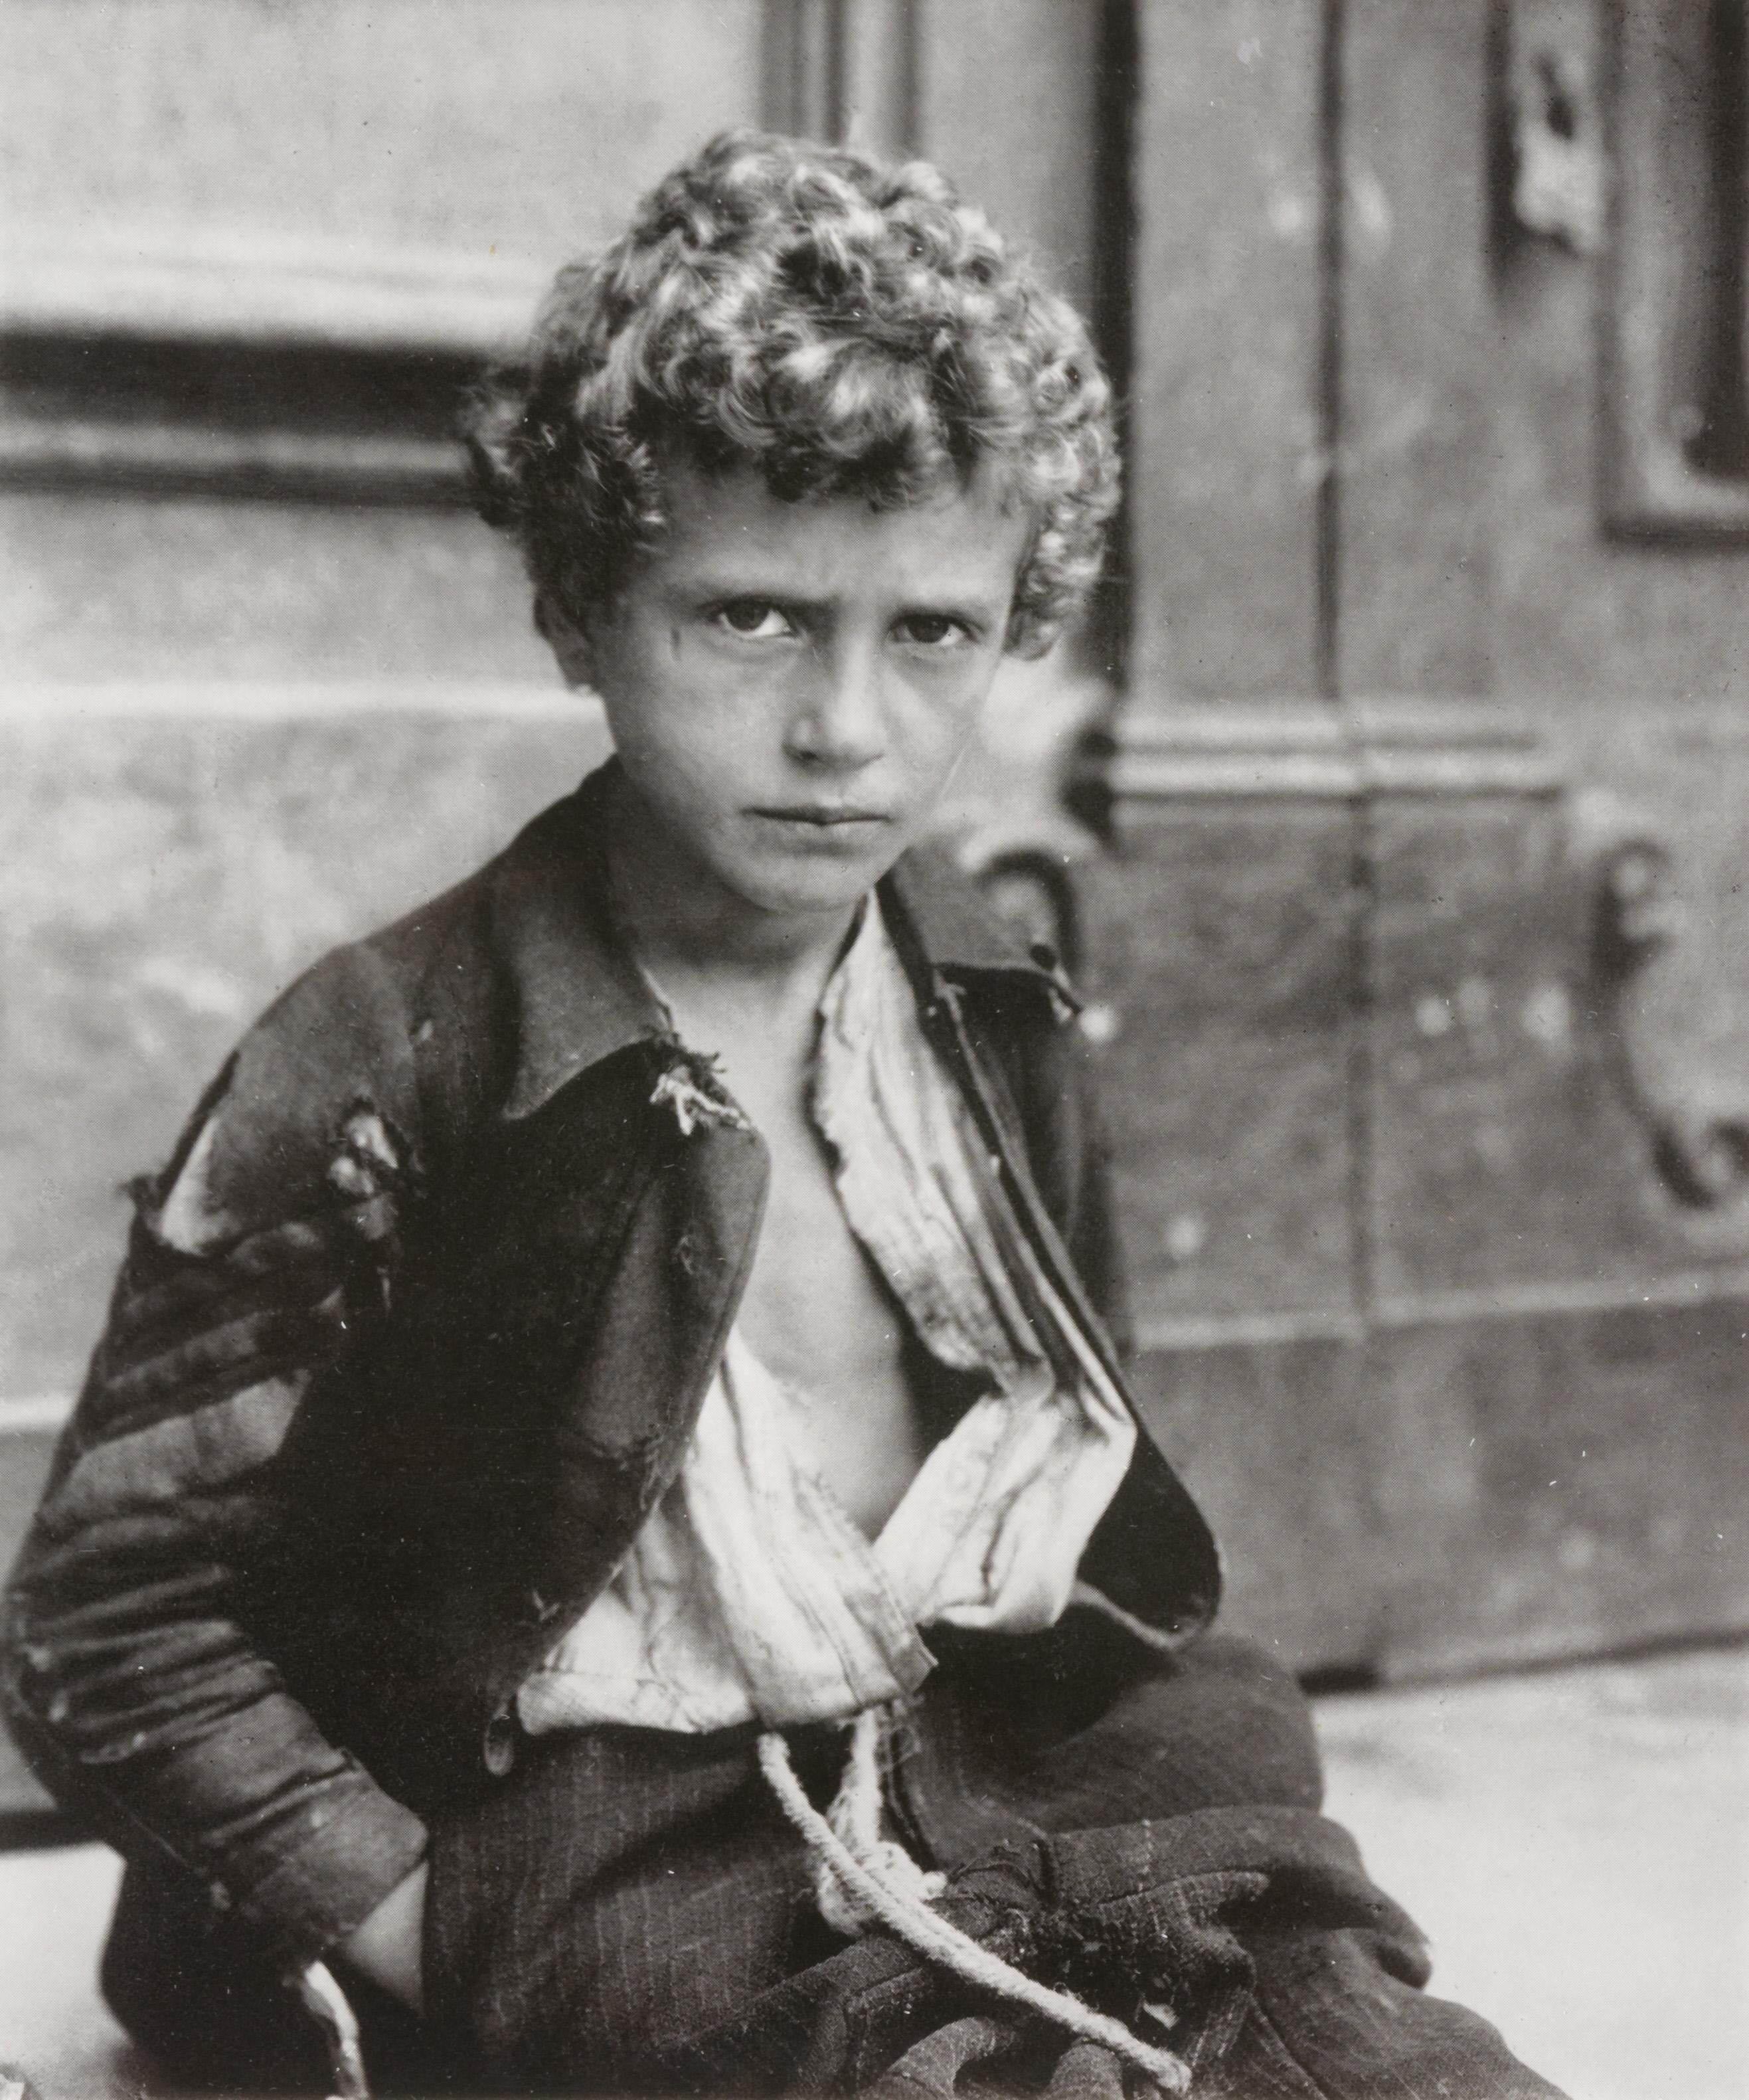 Stieglitz, Venetian Boy, Alfred Stieglitz Memorial Portfolio (after)